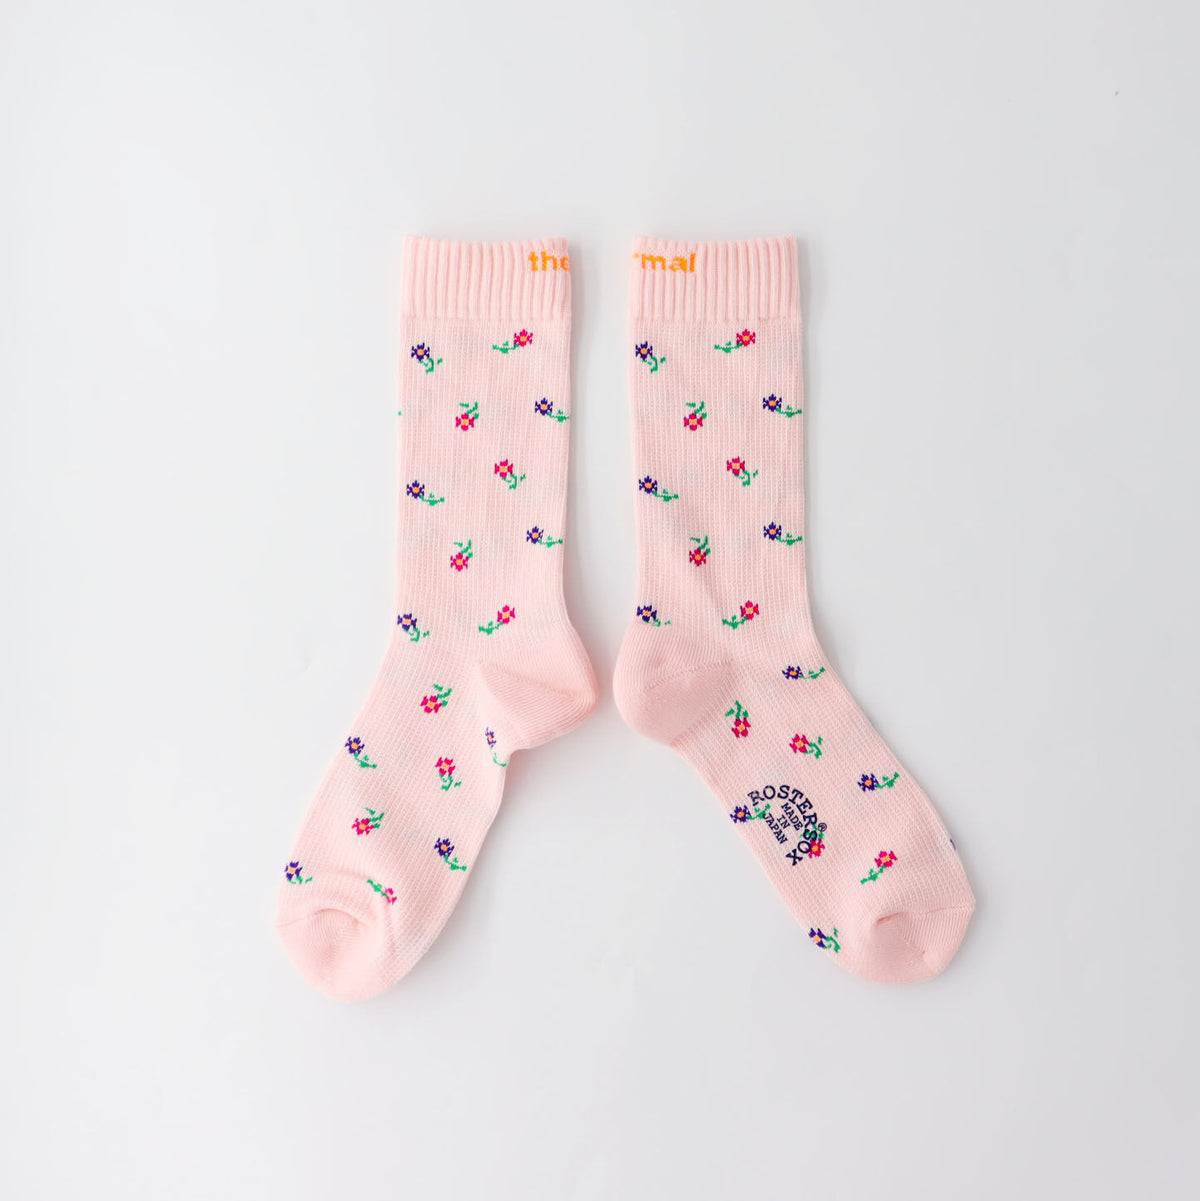 Rostersox Japan THERMAL Socks - MEDIUM - PINK